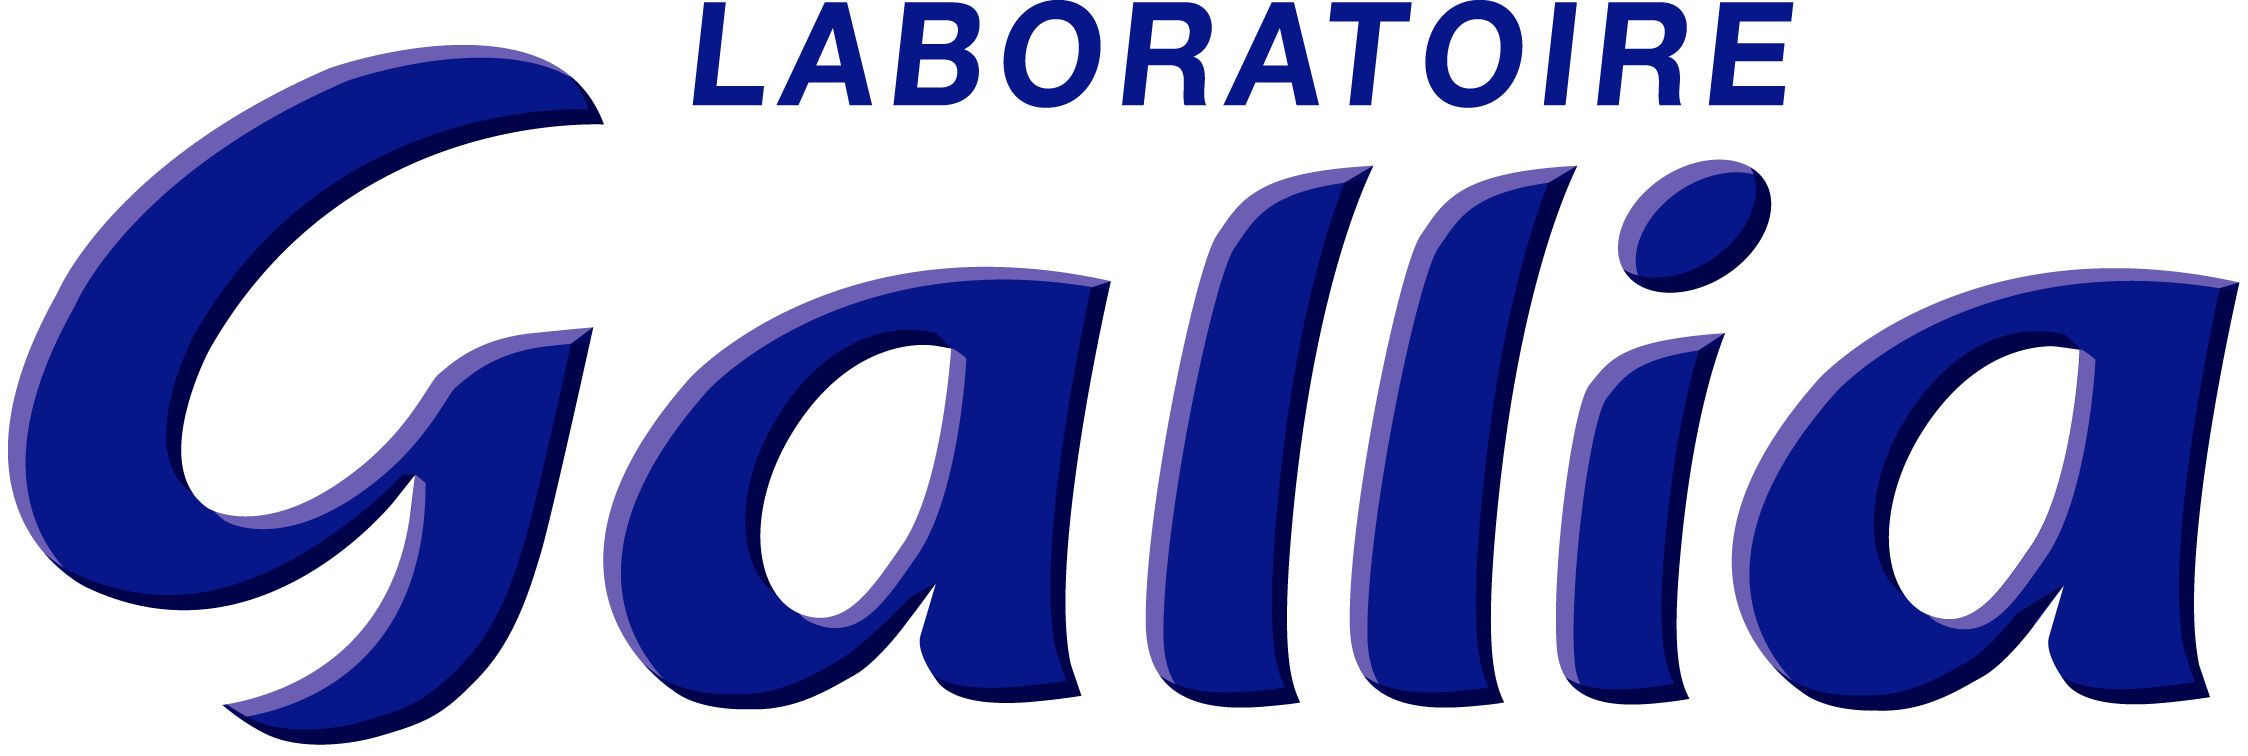 Logo-Gallia